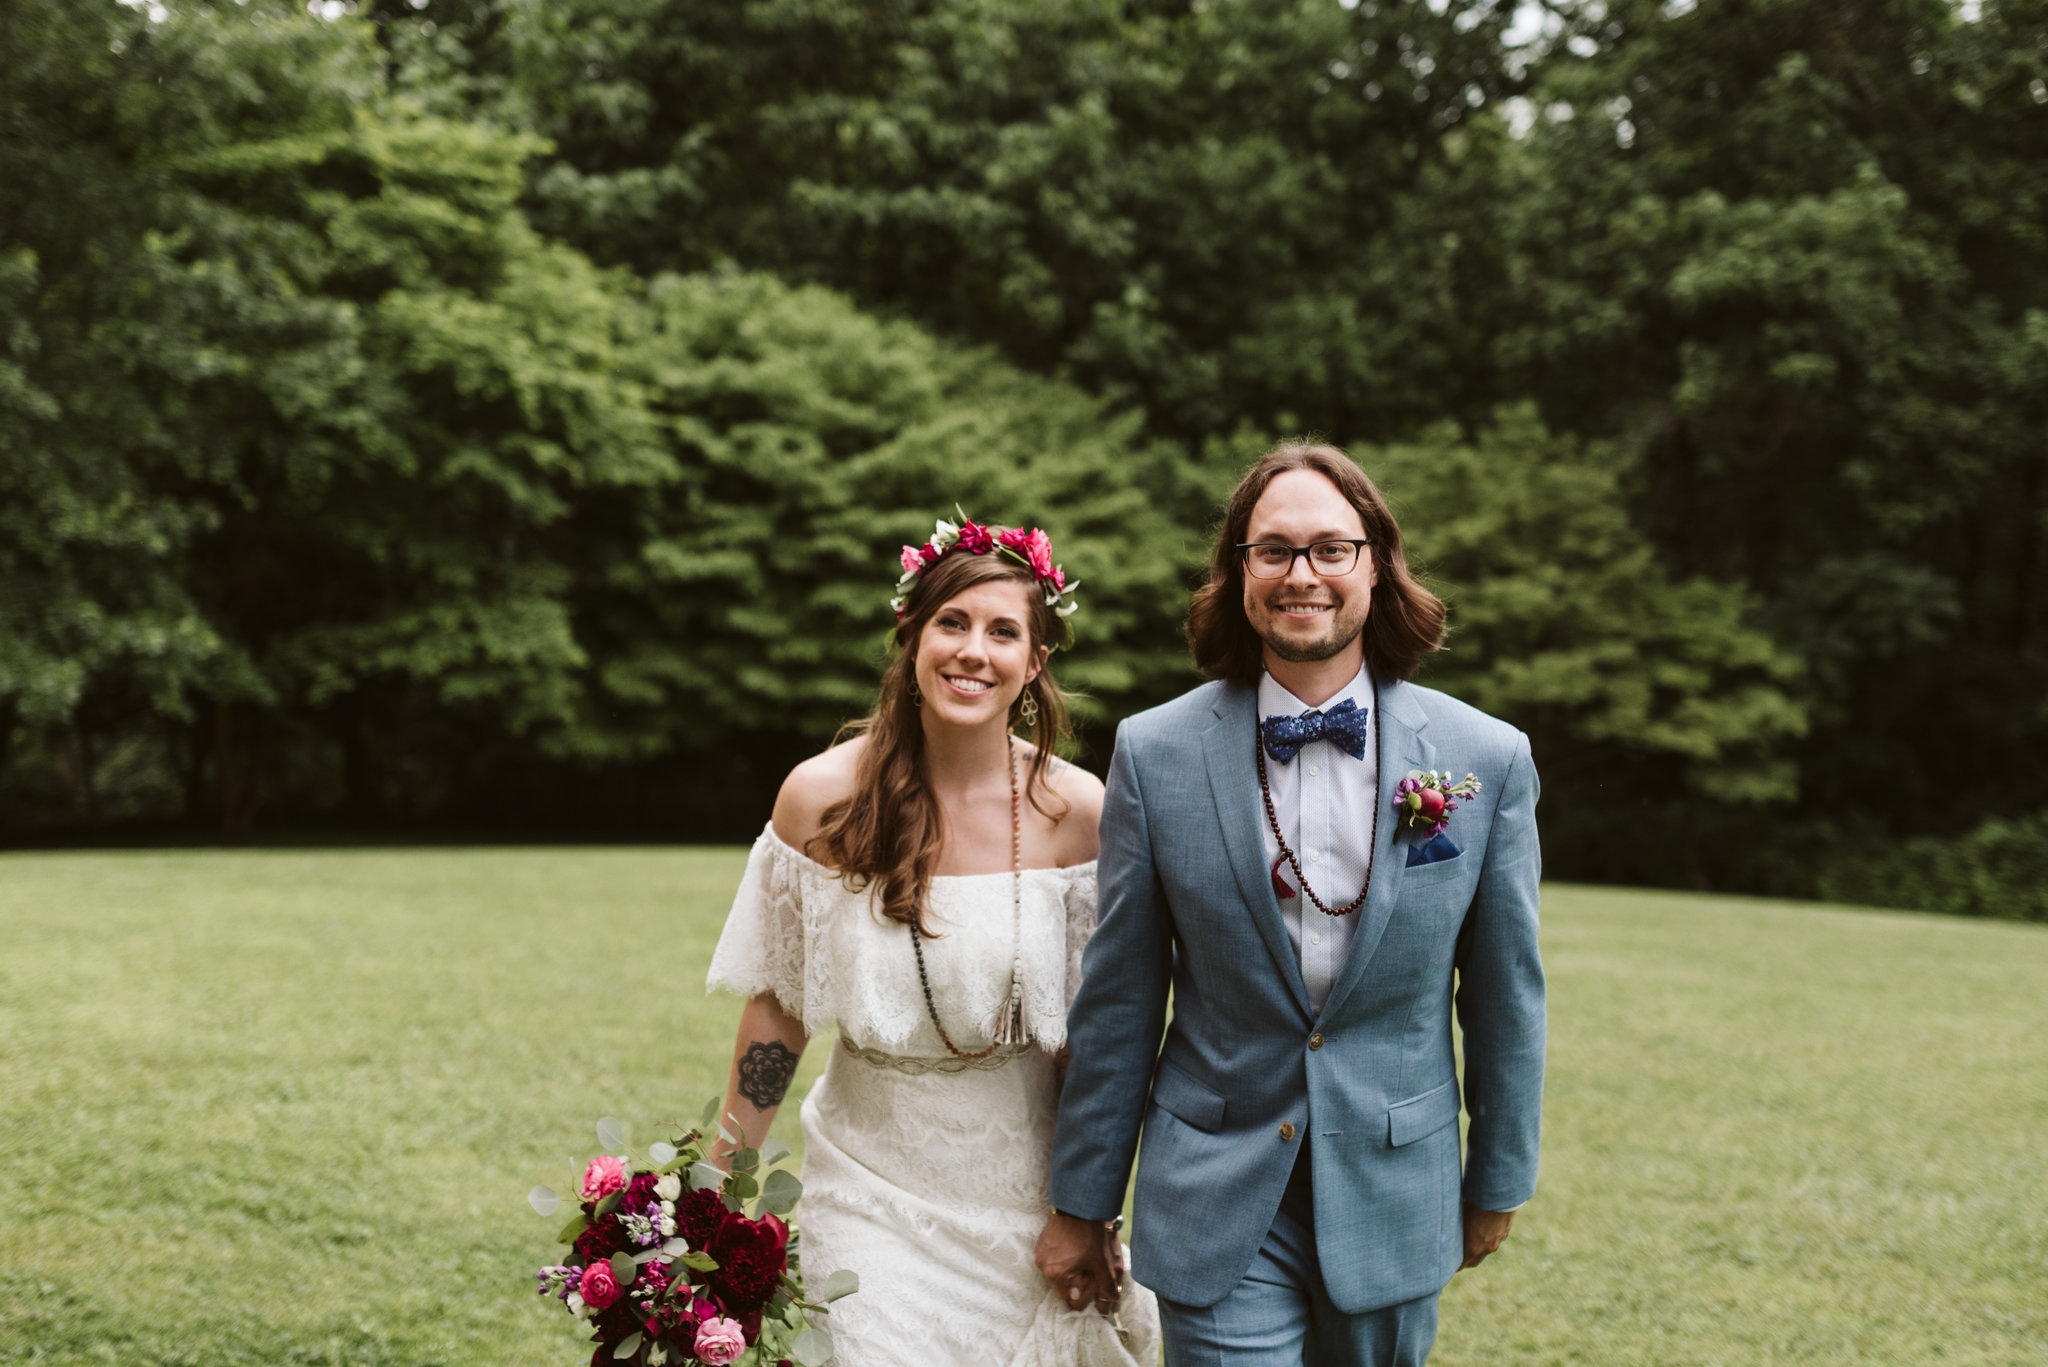  Annapolis, Quaker Wedding, Maryland Wedding Photographer, Intimate, Small Wedding, Vintage, DIY, Portrait of Bride and Groom Walking Hand in Hand 